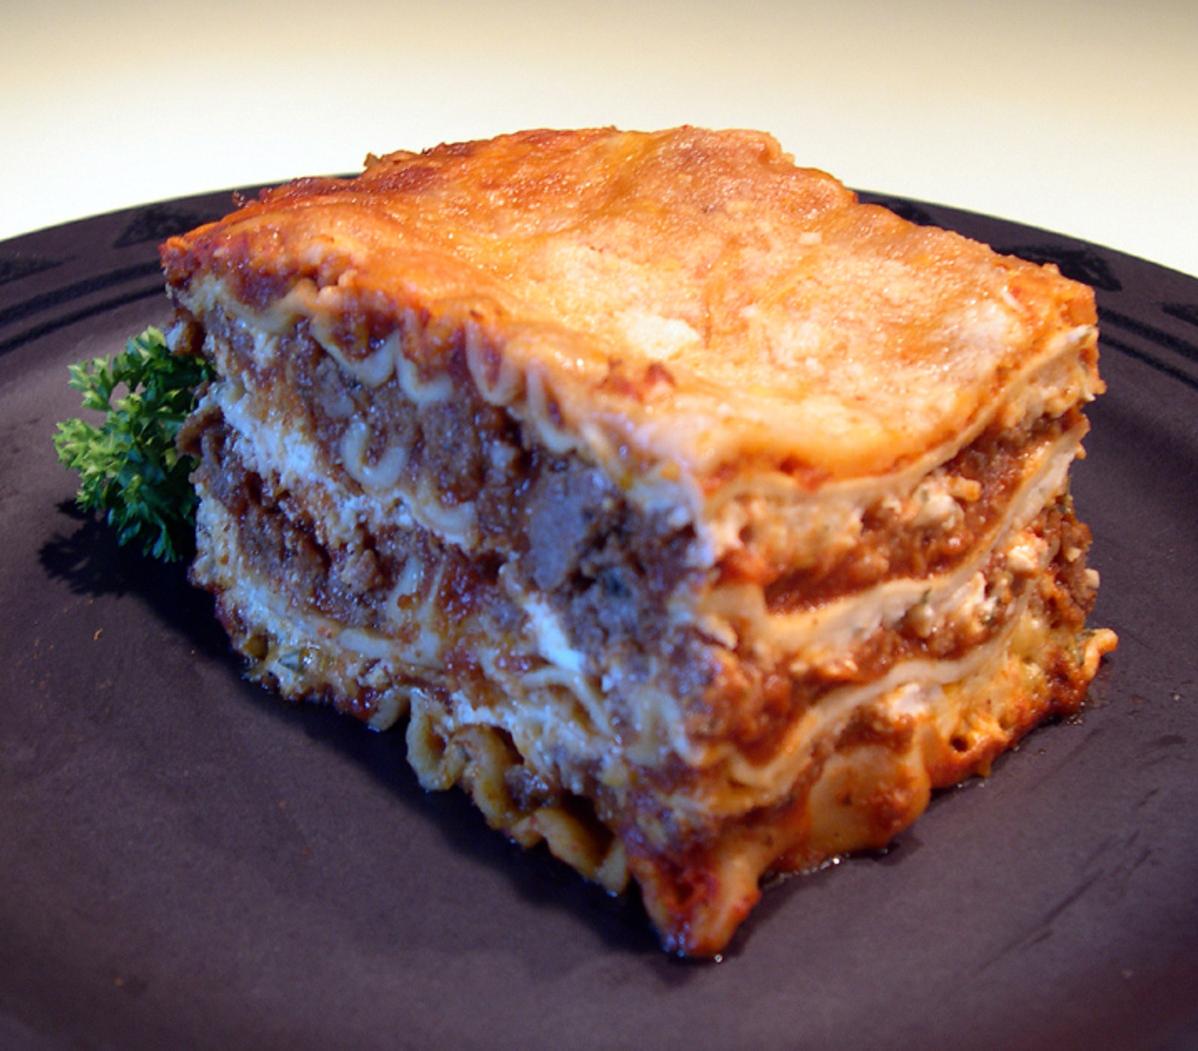  A delicious twist on traditional lasagna